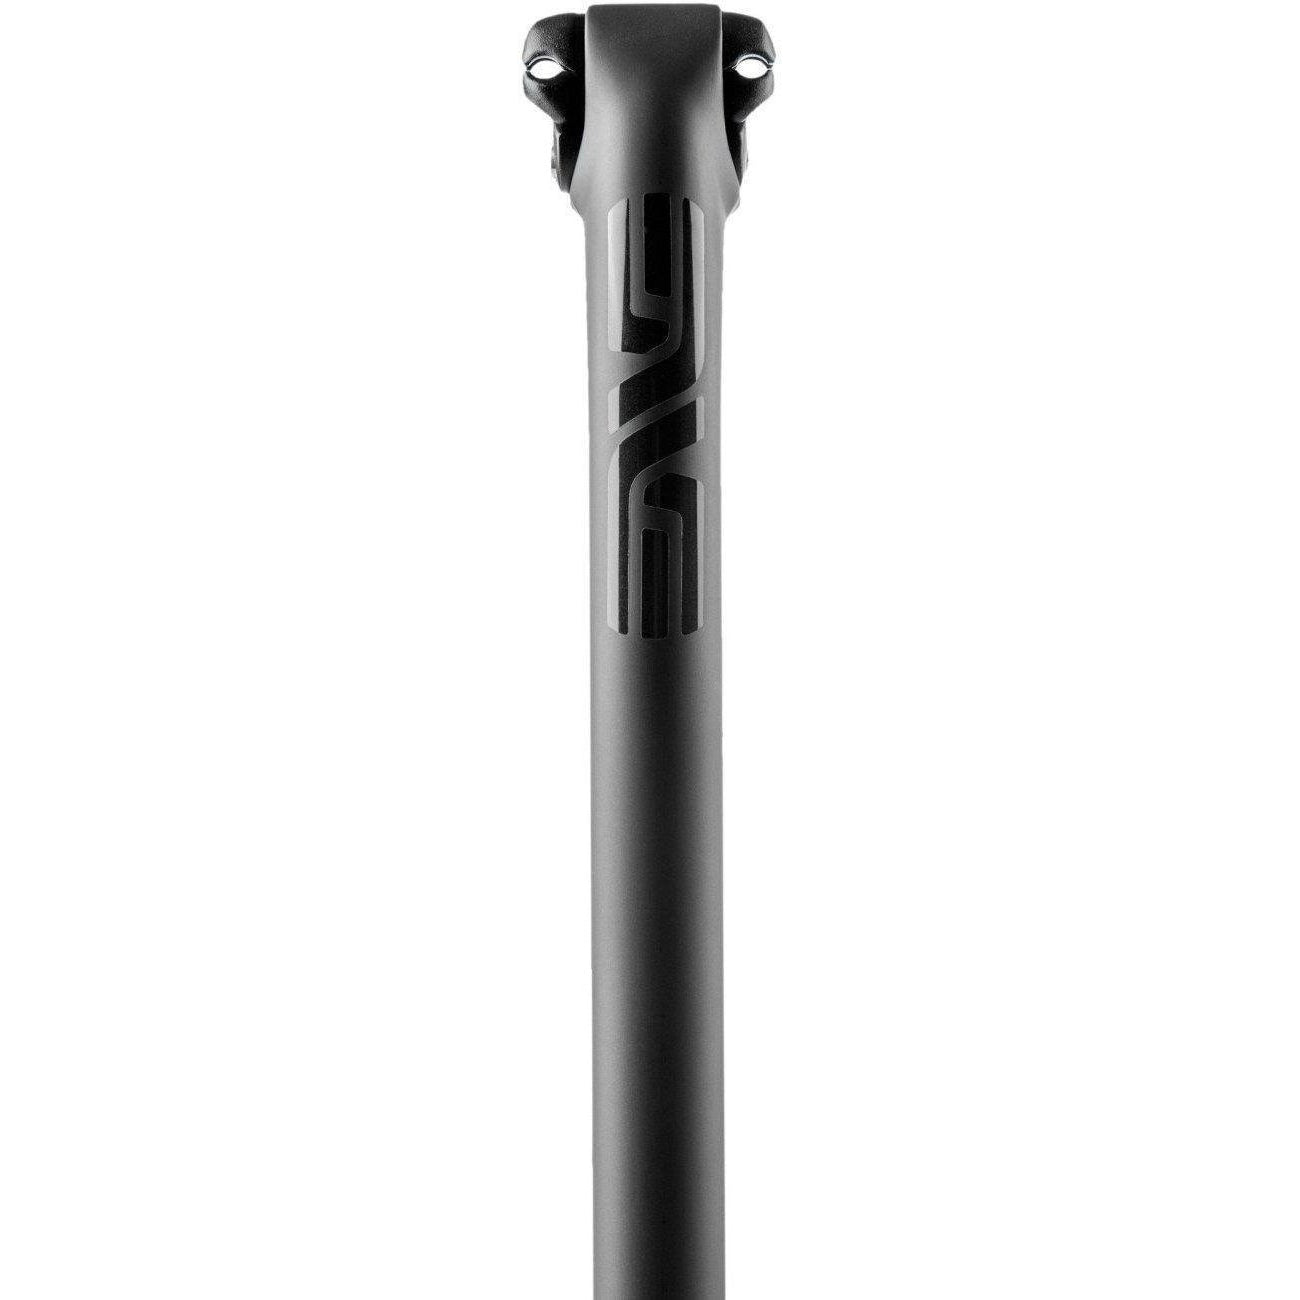 ENVE 300mm Carbon Seatpost with Di2 Plug Black / 27.2mm post - 300mm length - 0mm offset